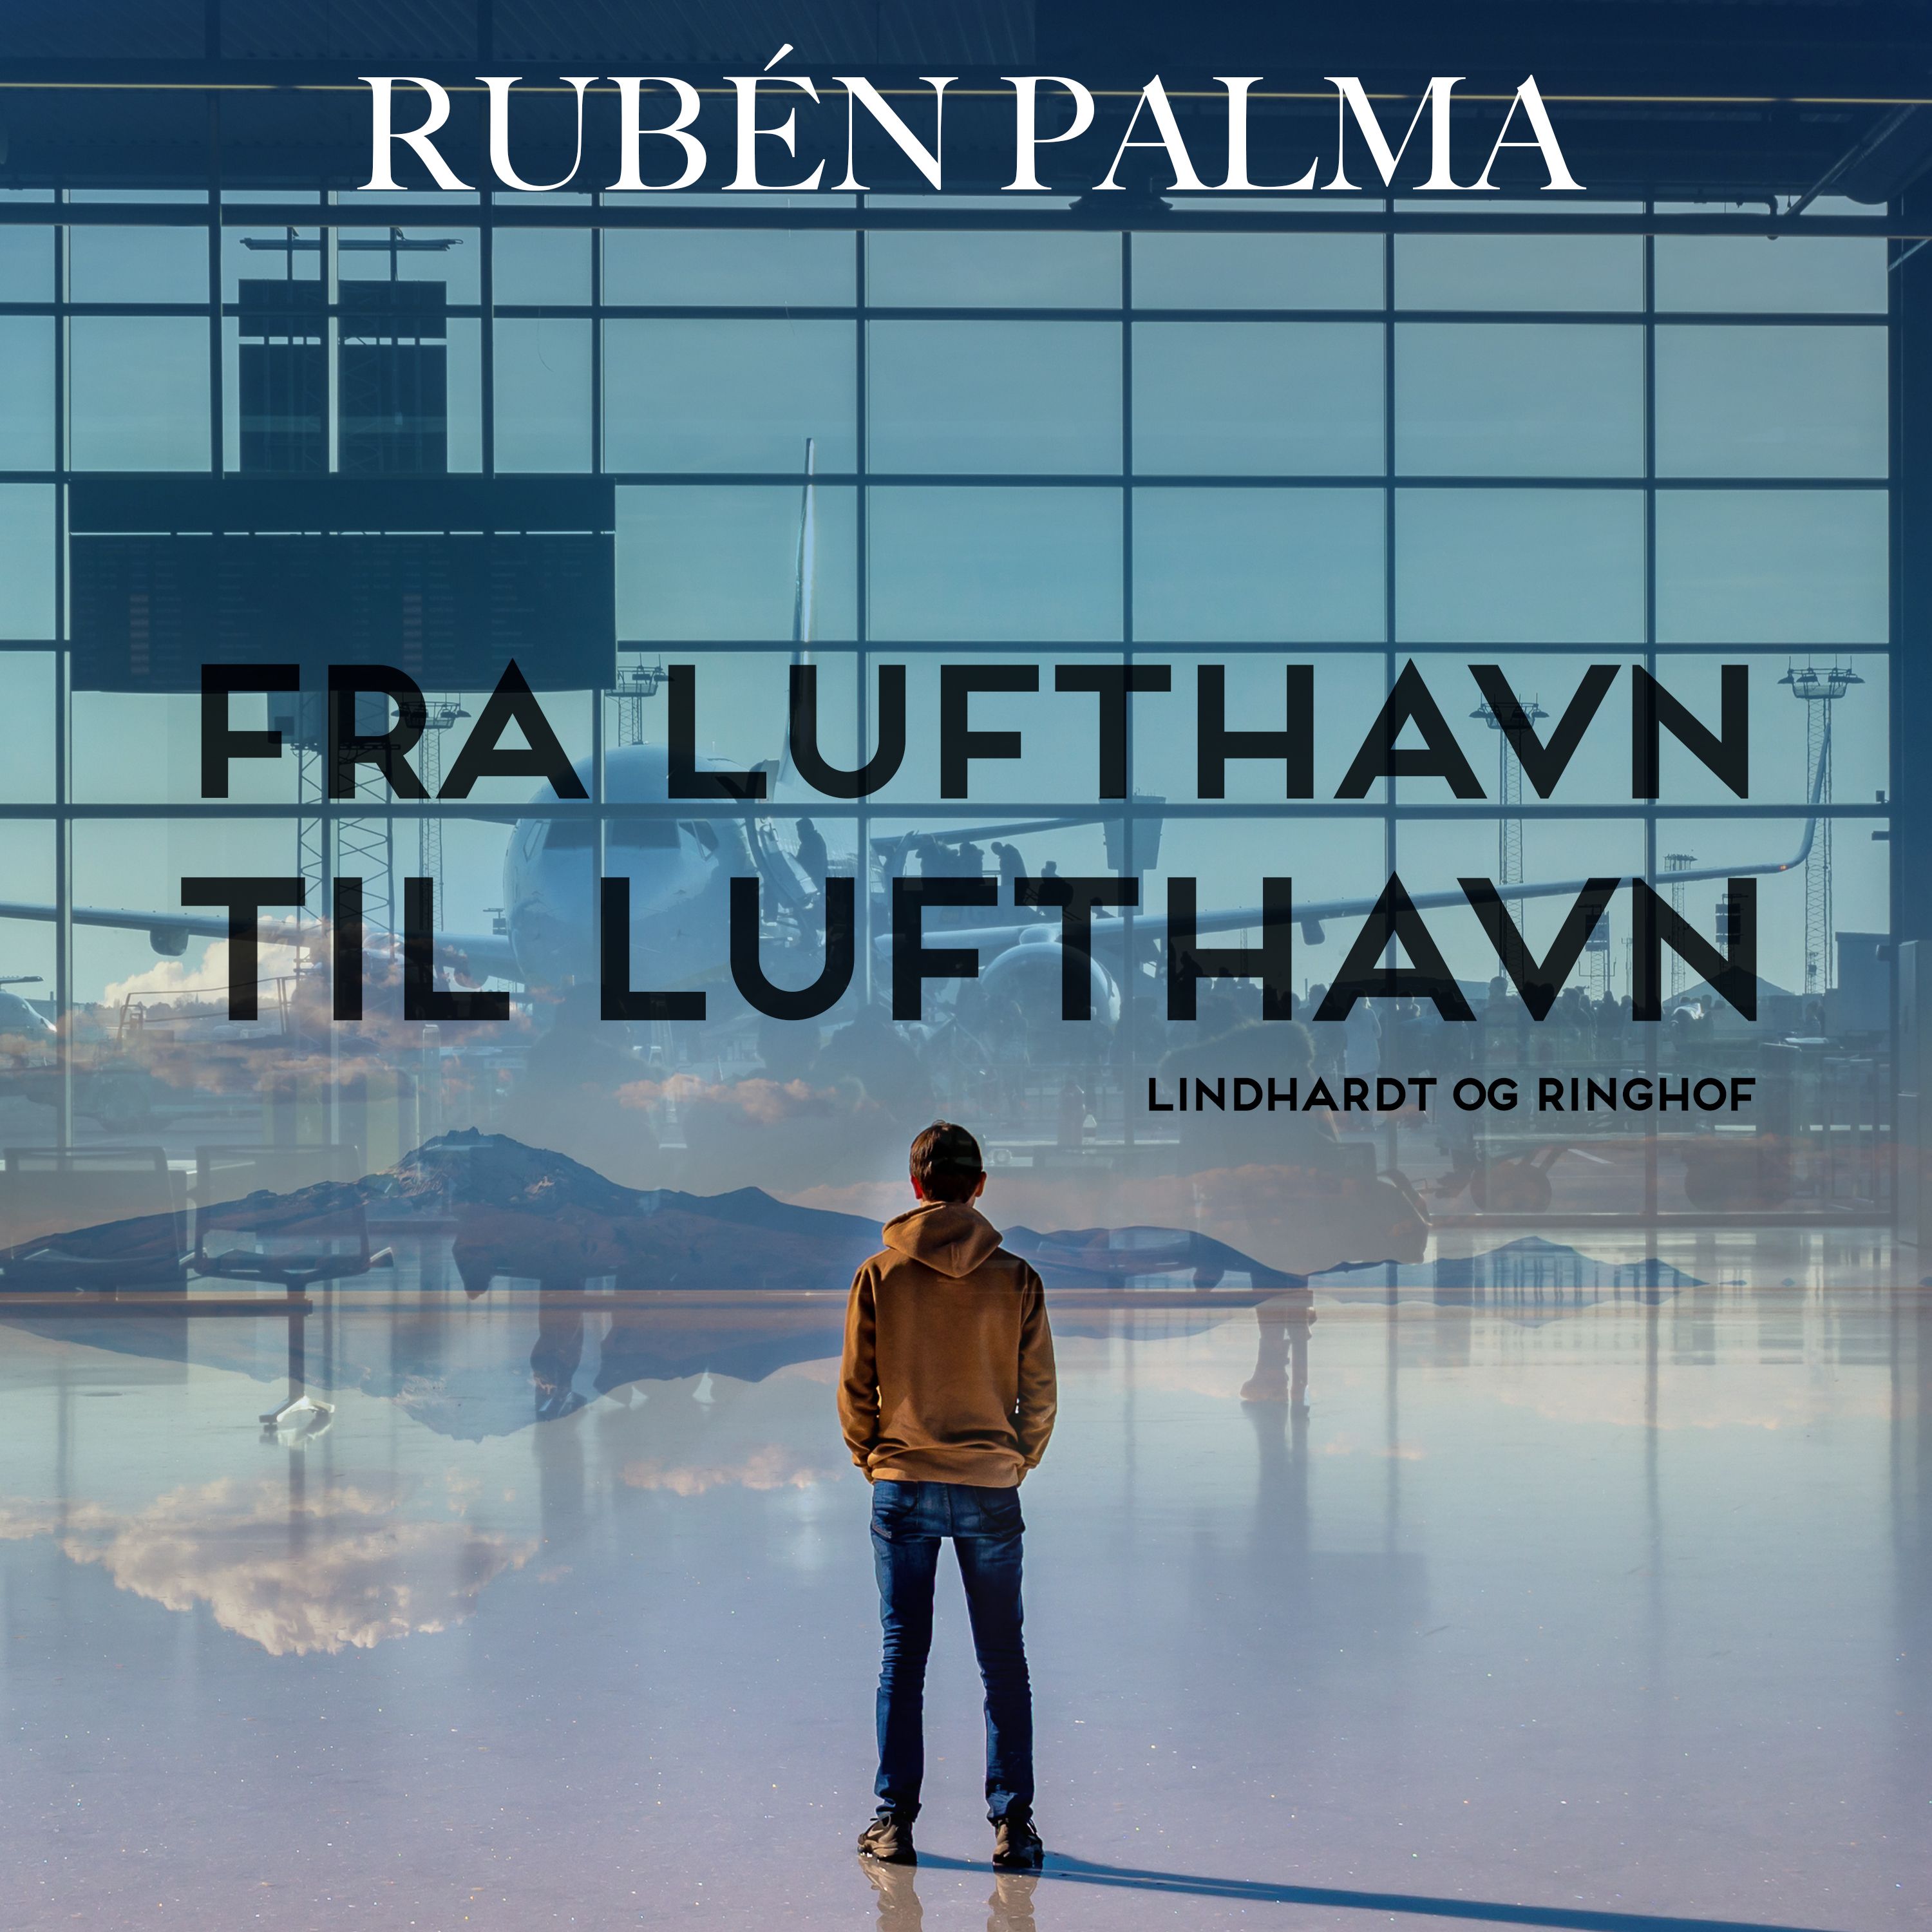 Fra lufthavn til lufthavn, ljudbok av Rubén Palma